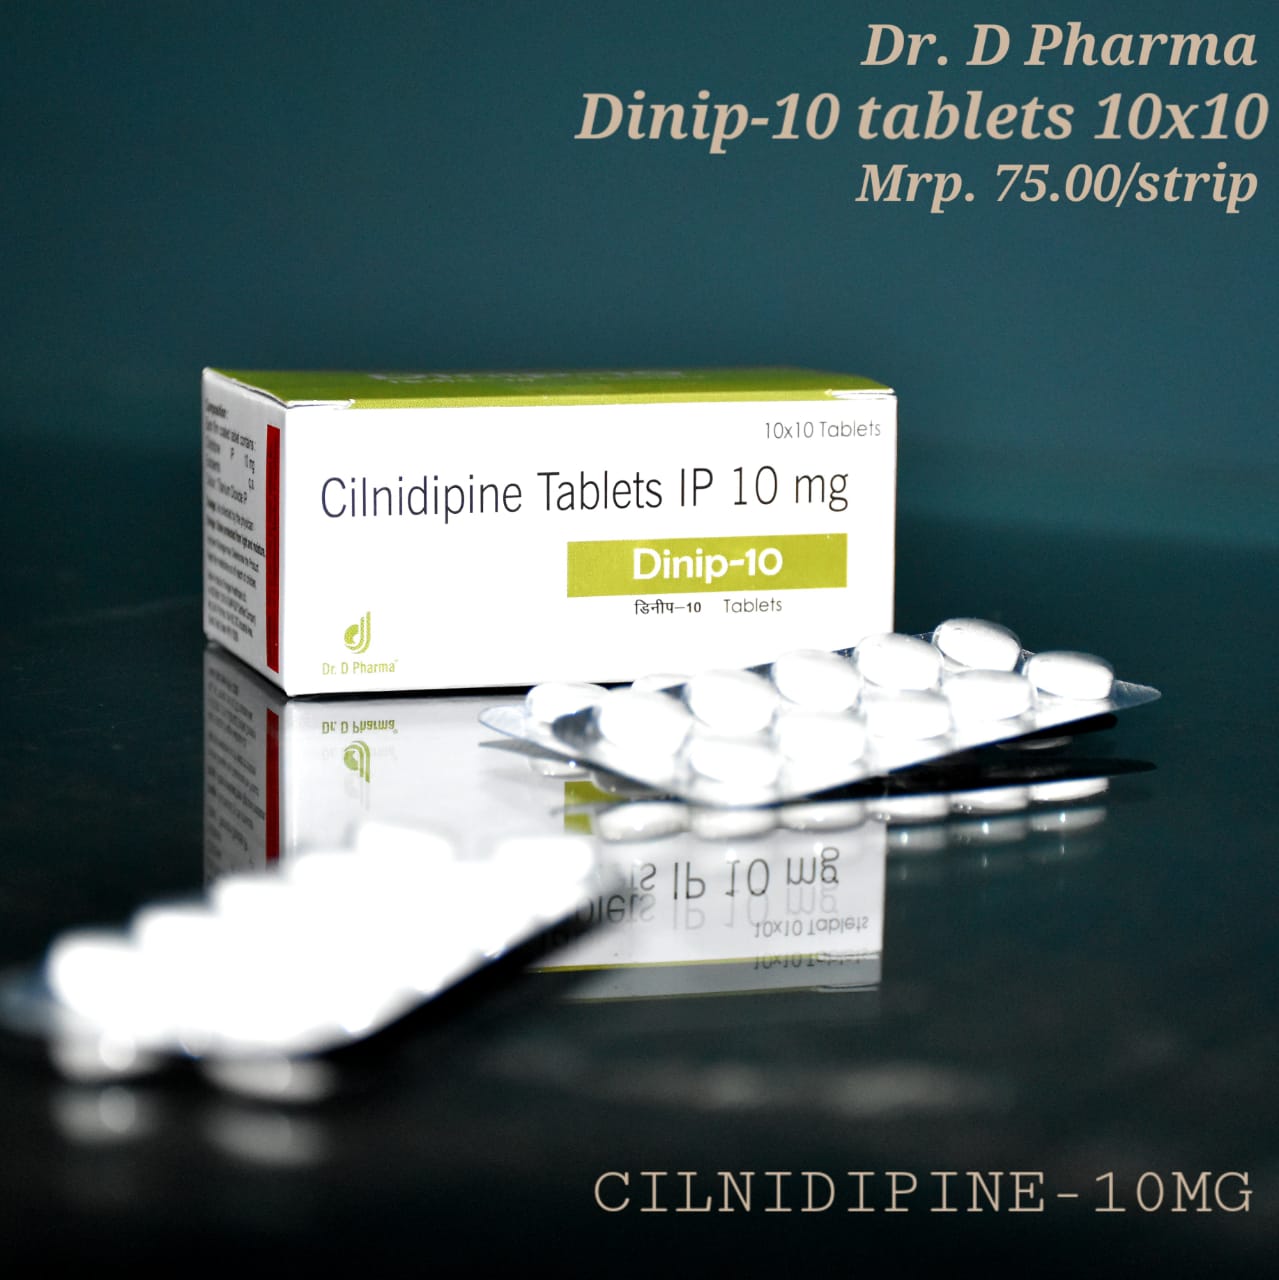 Cilnidipine Tablets IP 10 mg